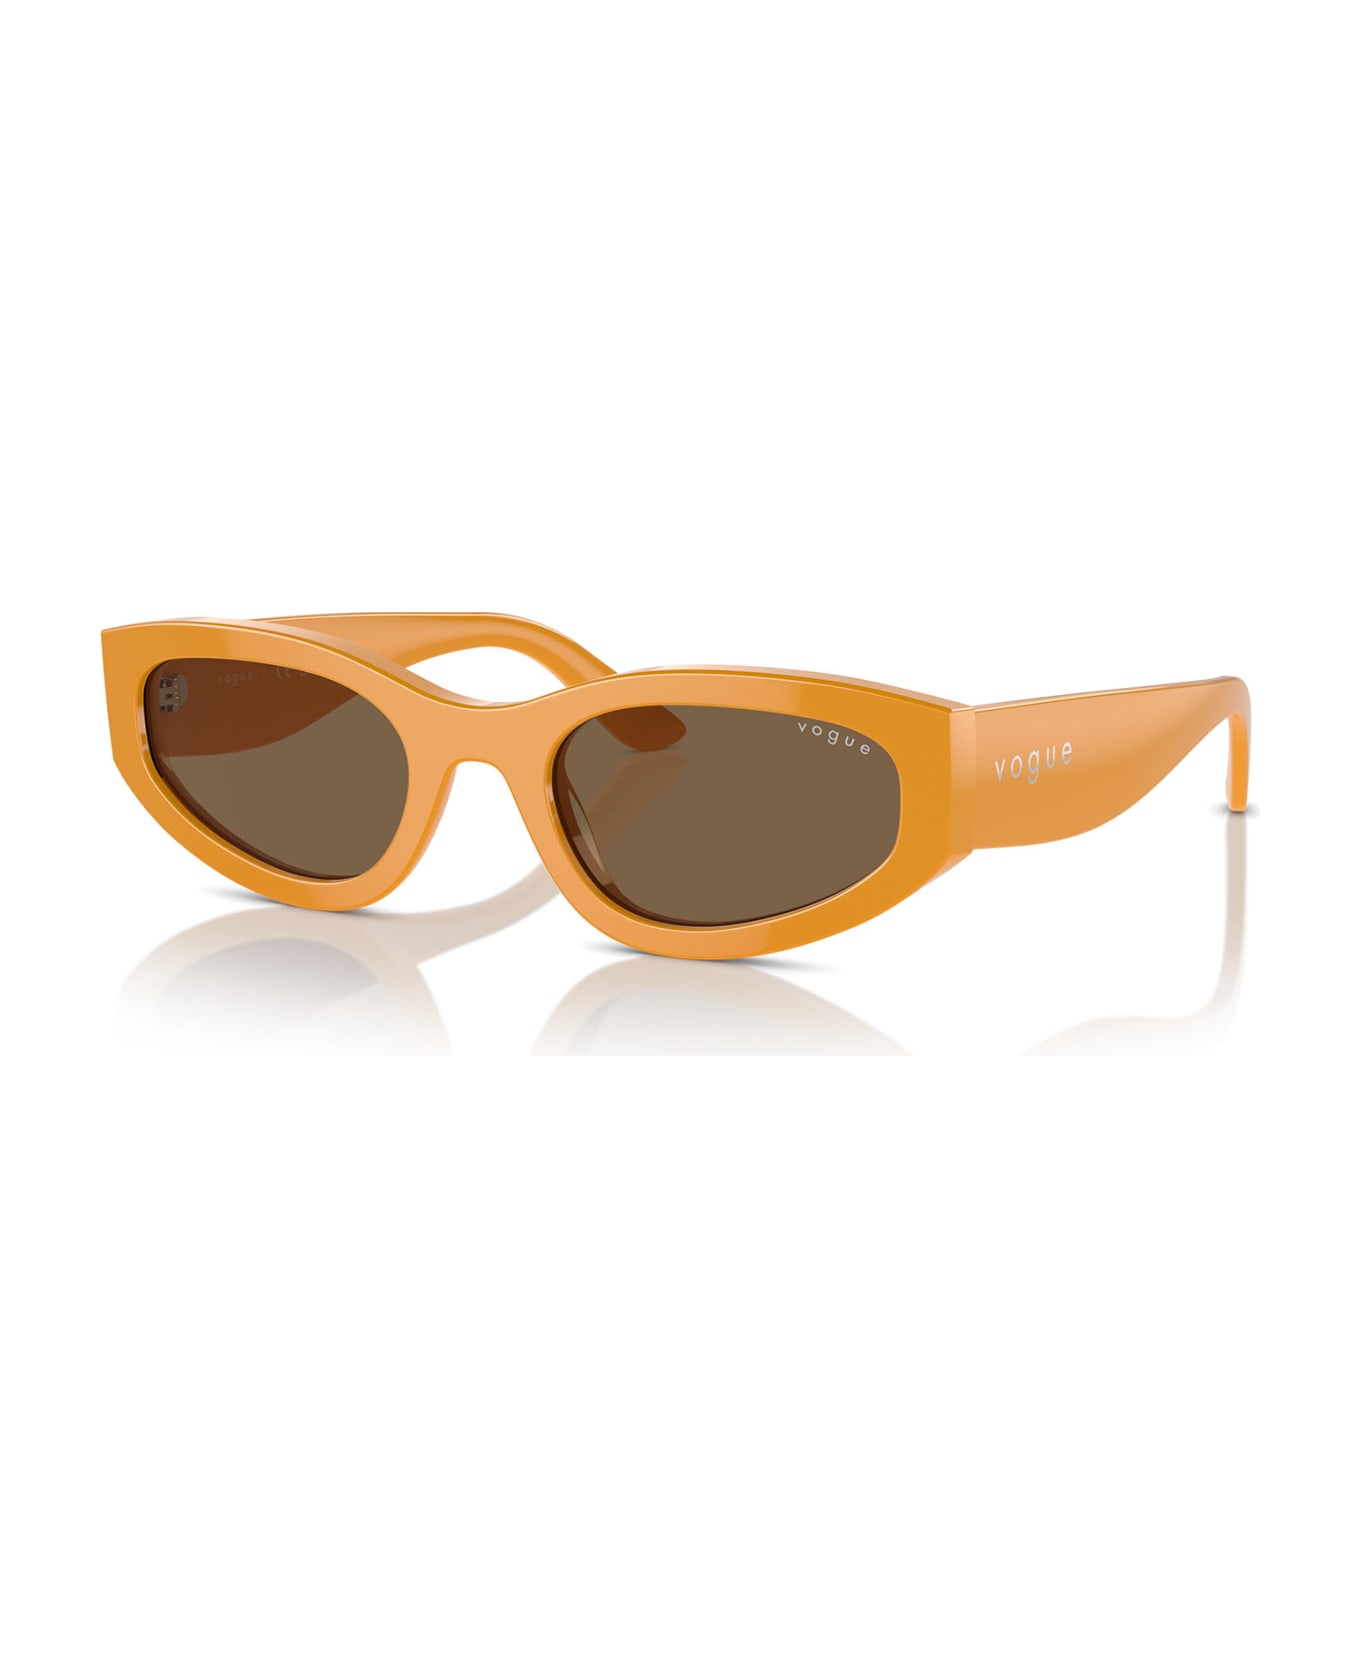 Vogue Eyewear Vo5585s Full Ocher ROSSI sunglasses - Full Ocher